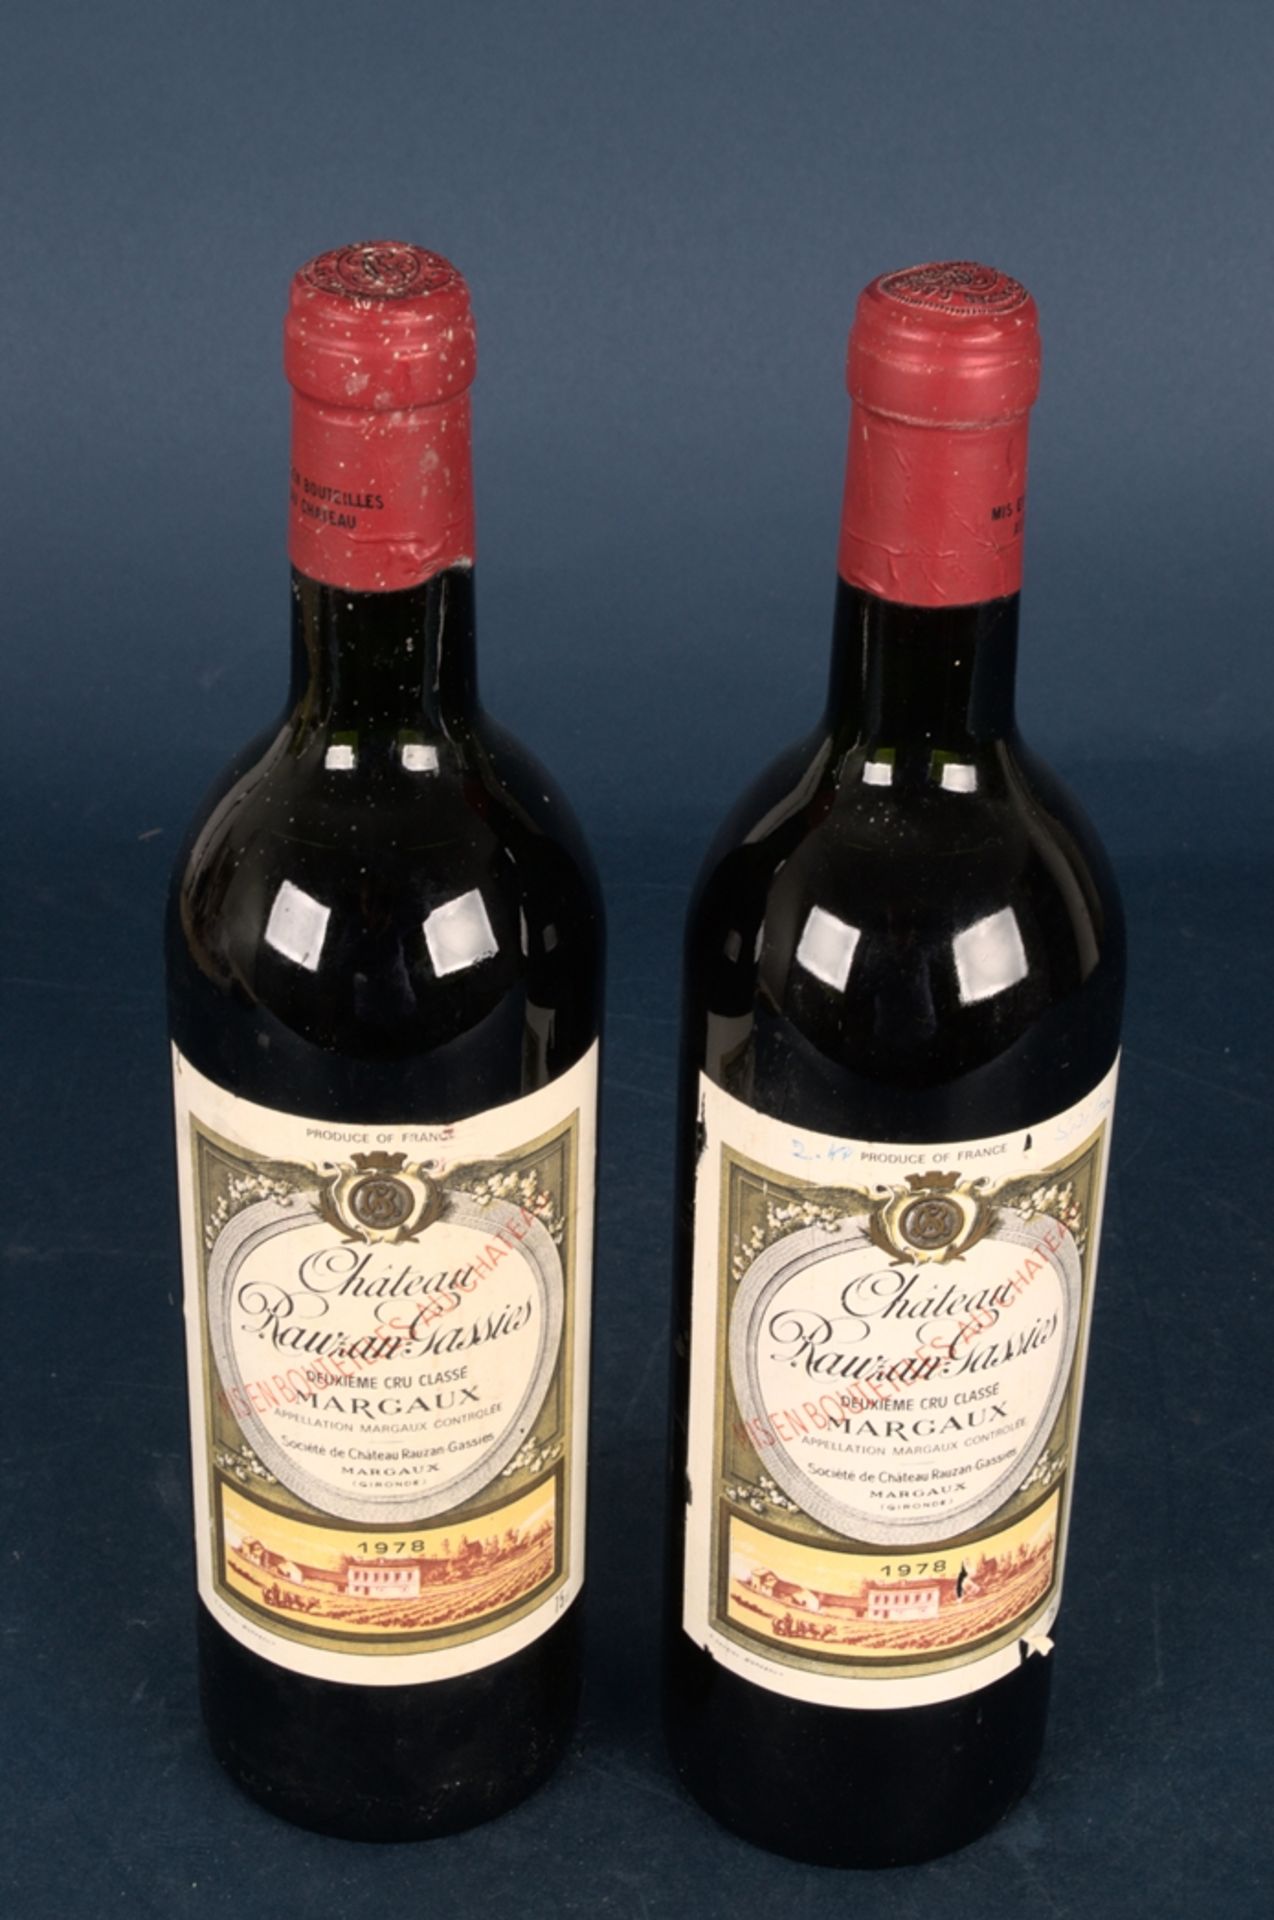 2 Flaschen Rotwein 1978er "Chateau Rauzan Gassies", 2eme Grand Cru Classe Margaux Bordeaux. - Bild 3 aus 9